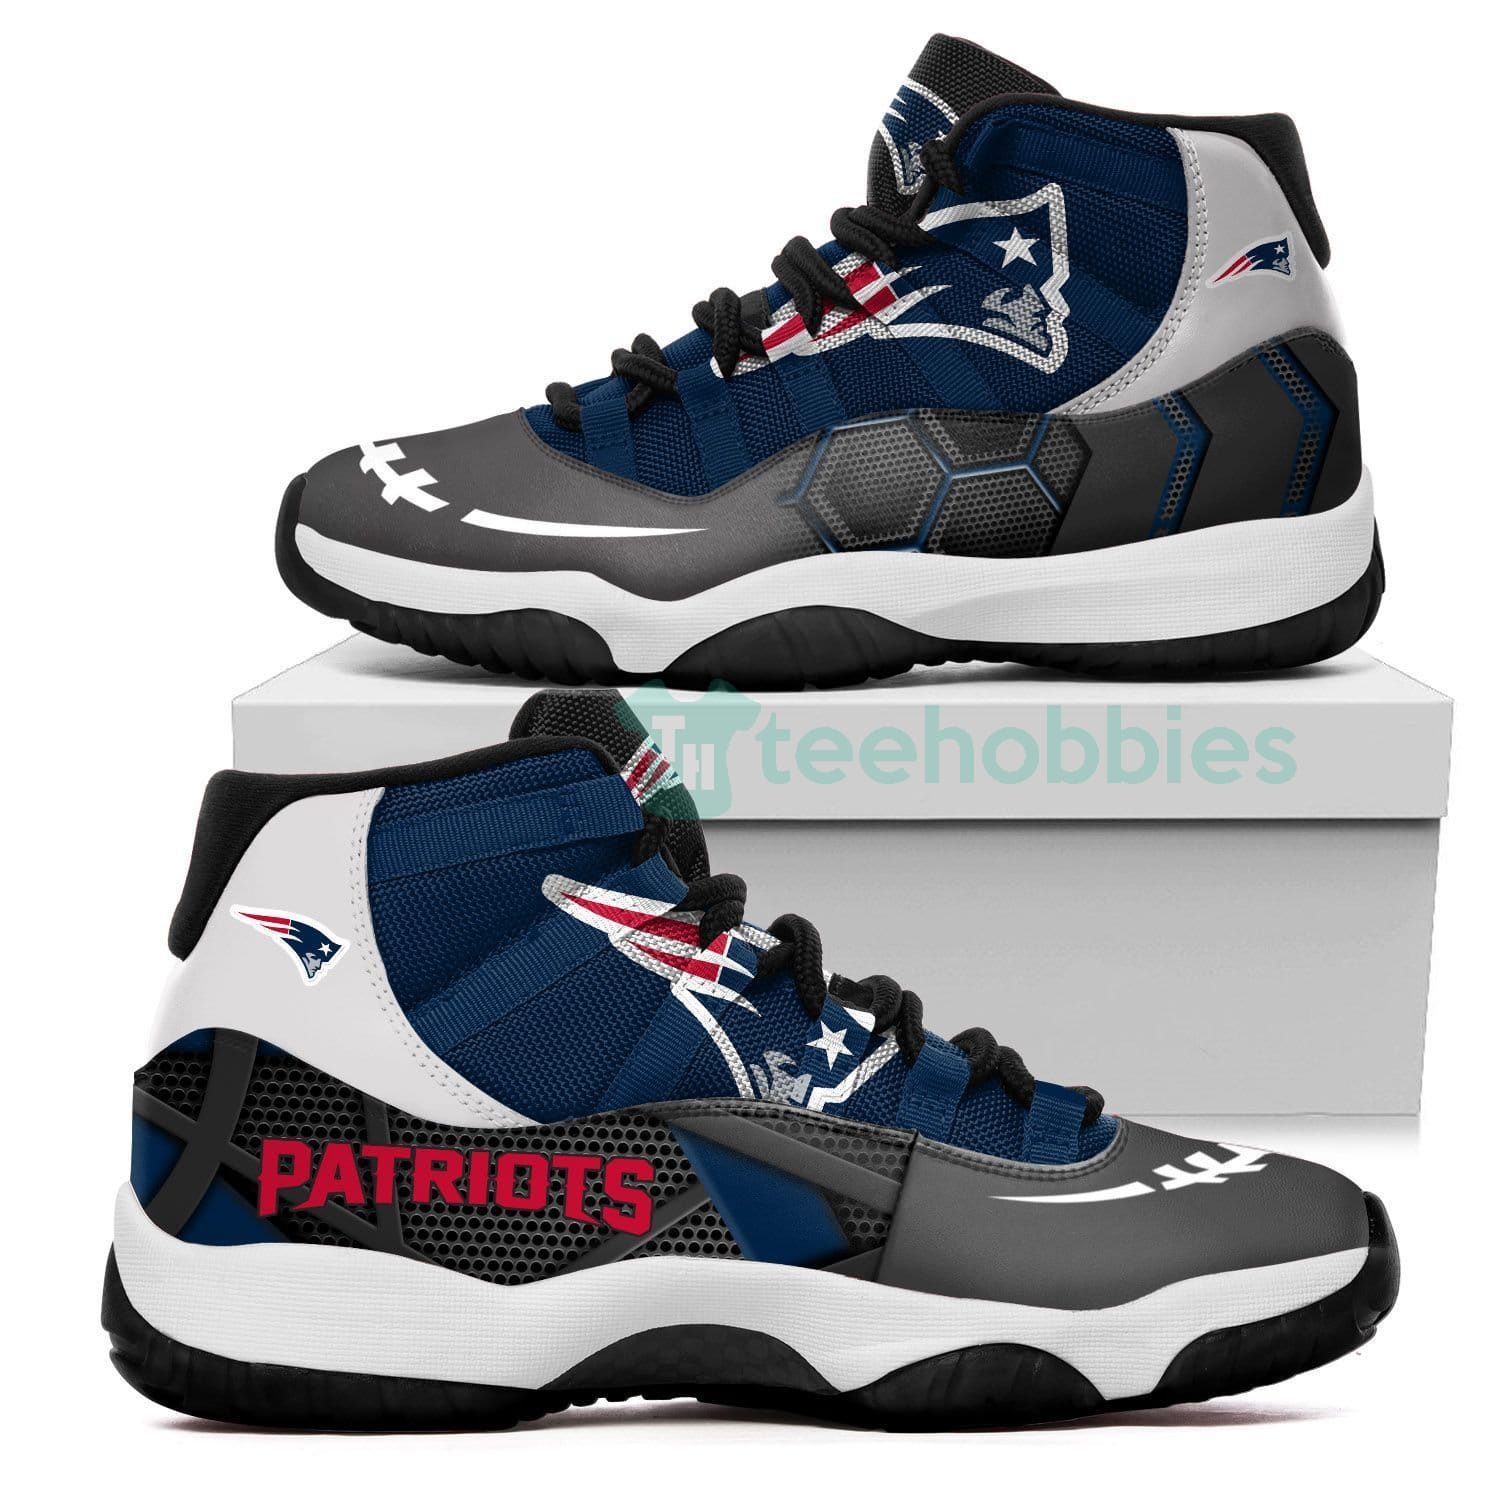 New England Patriots New Air Jordan 11 Shoes Gift